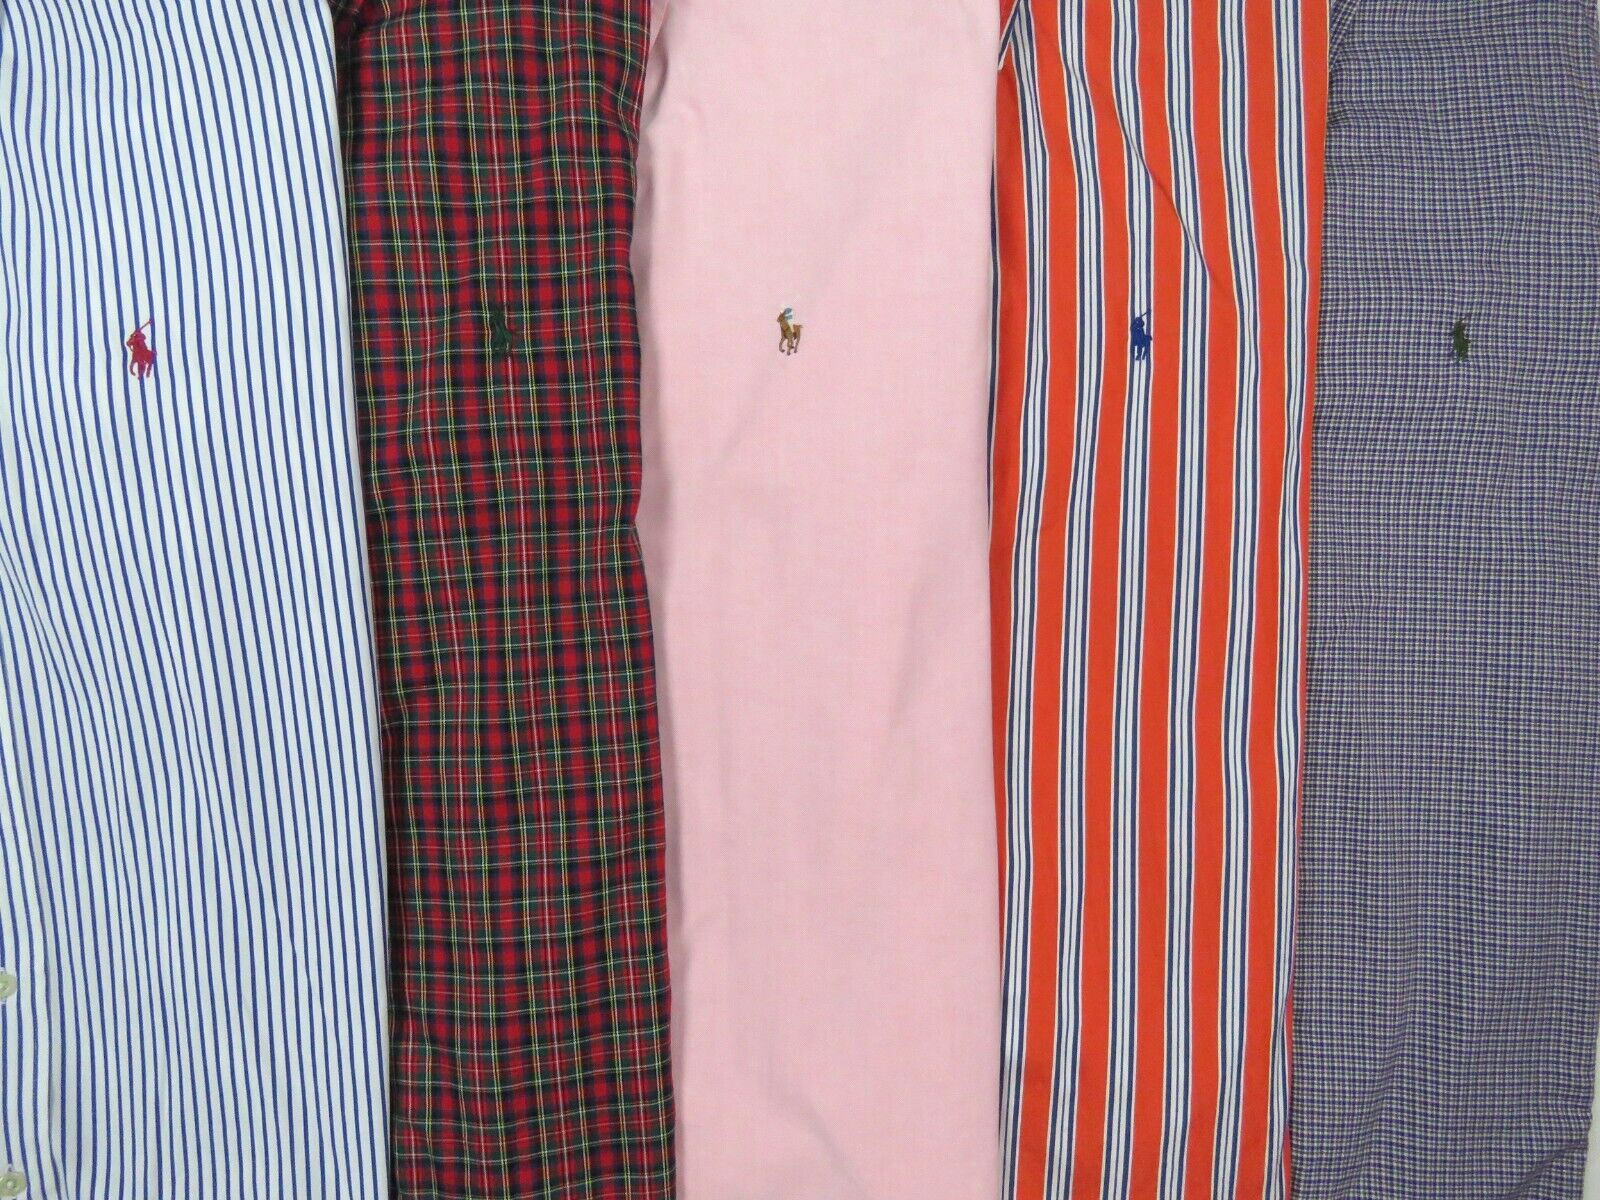 Lot Of 5 Ralph Lauren Polo Long Sleeve Button Front Shirts Mens 16 1/2 L 4 NWOT Ralph Lauren Does Not Apply